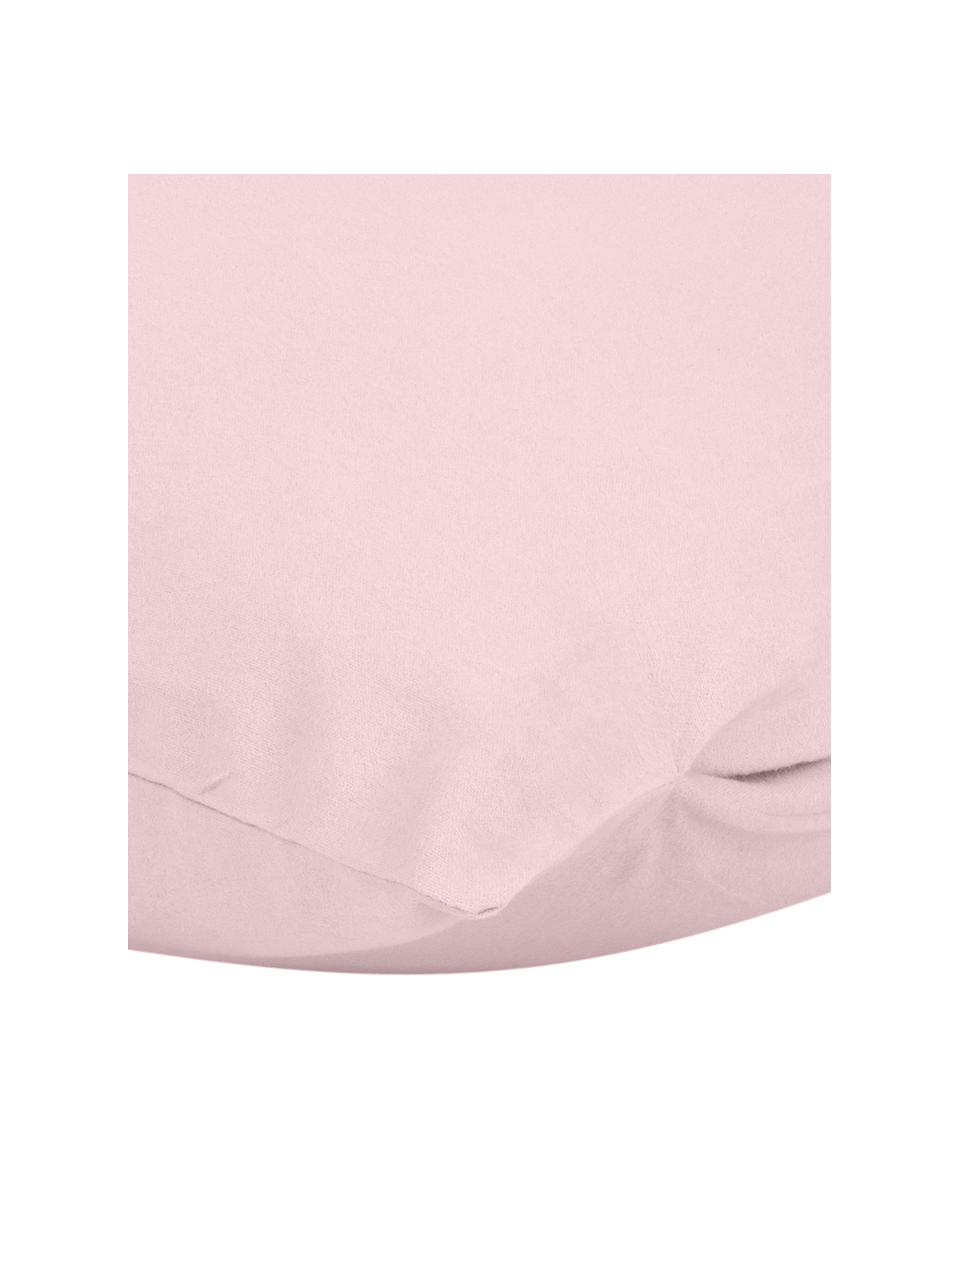 Flanell-Kissenbezüge Biba in Rosa, 2 Stück, Webart: Flanell Flanell ist ein k, Rosa, 40 x 80 cm